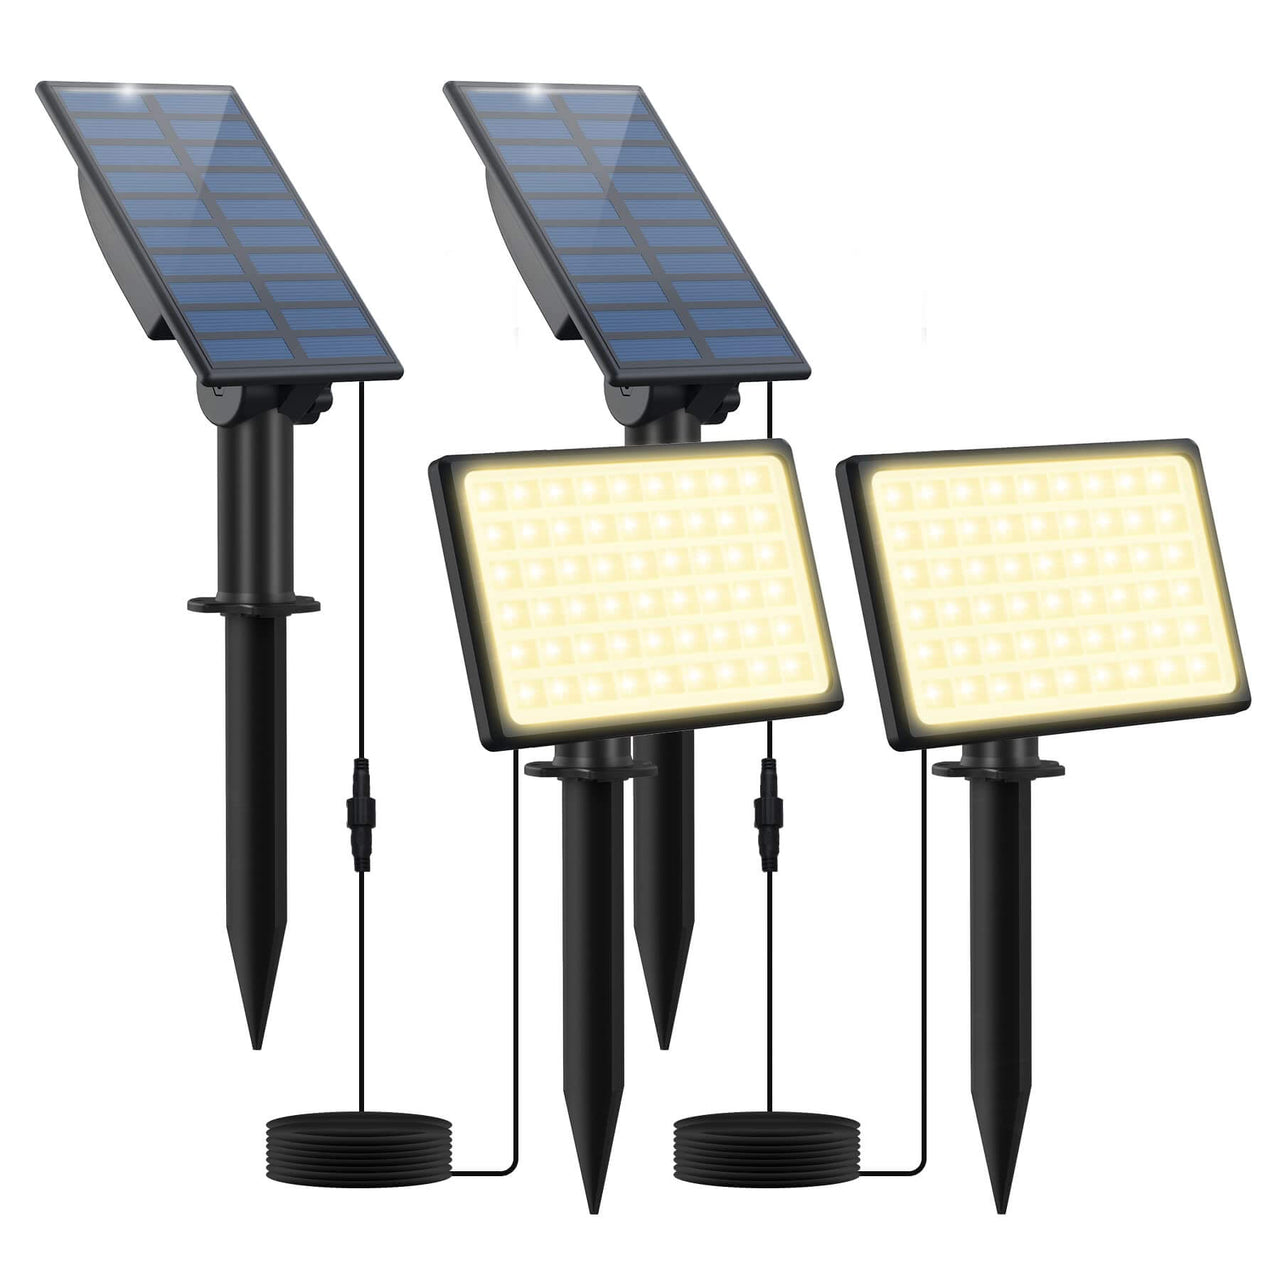 TSUN 54 LEDs Separate Solar Security Lights